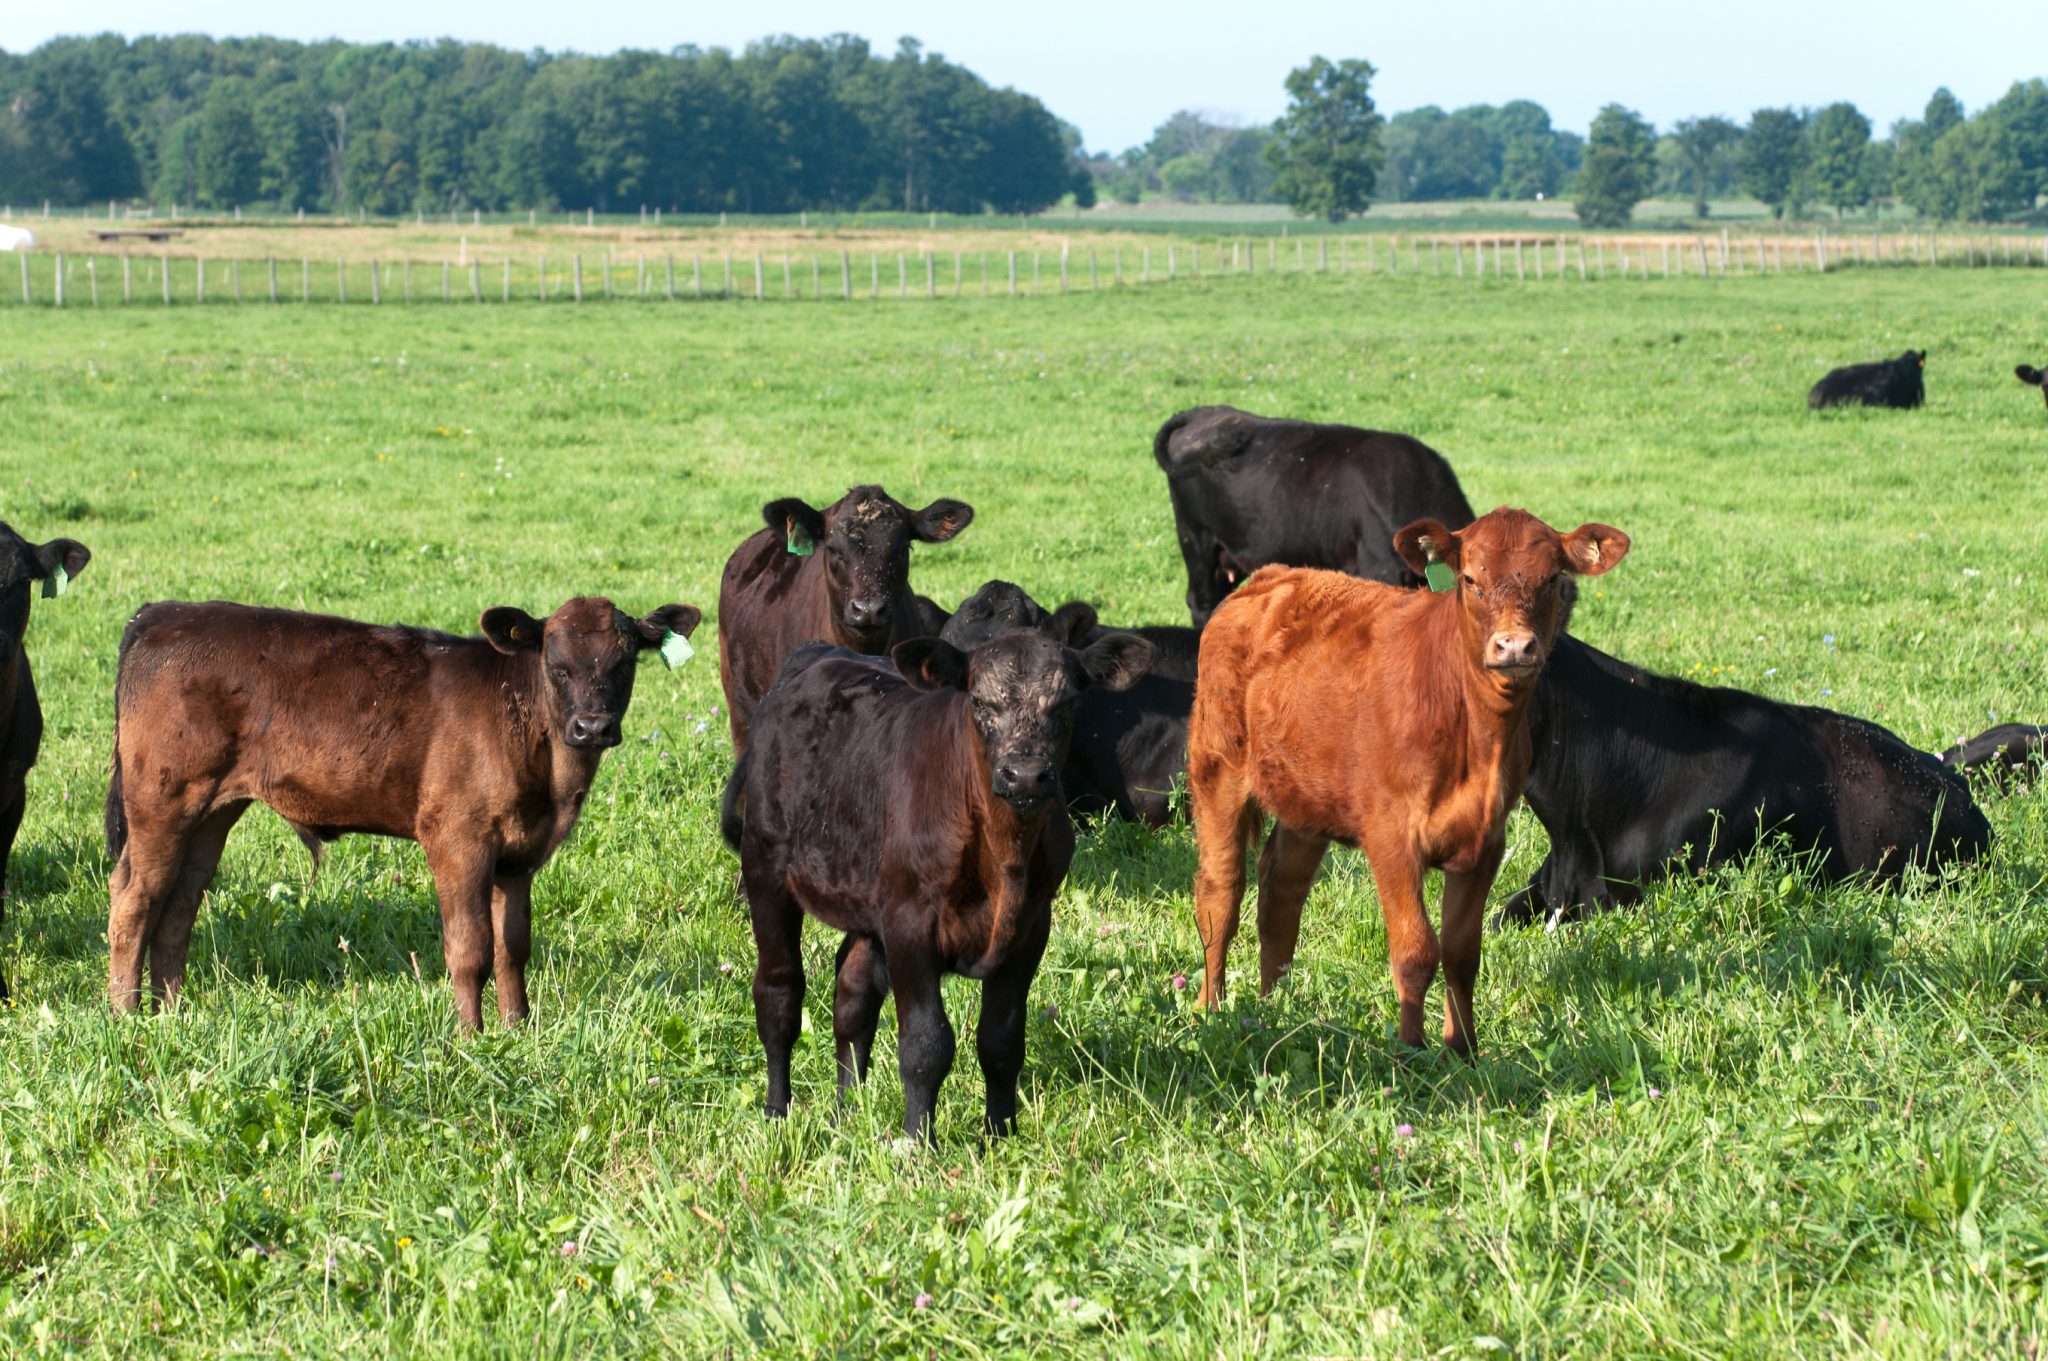 Calves grazing